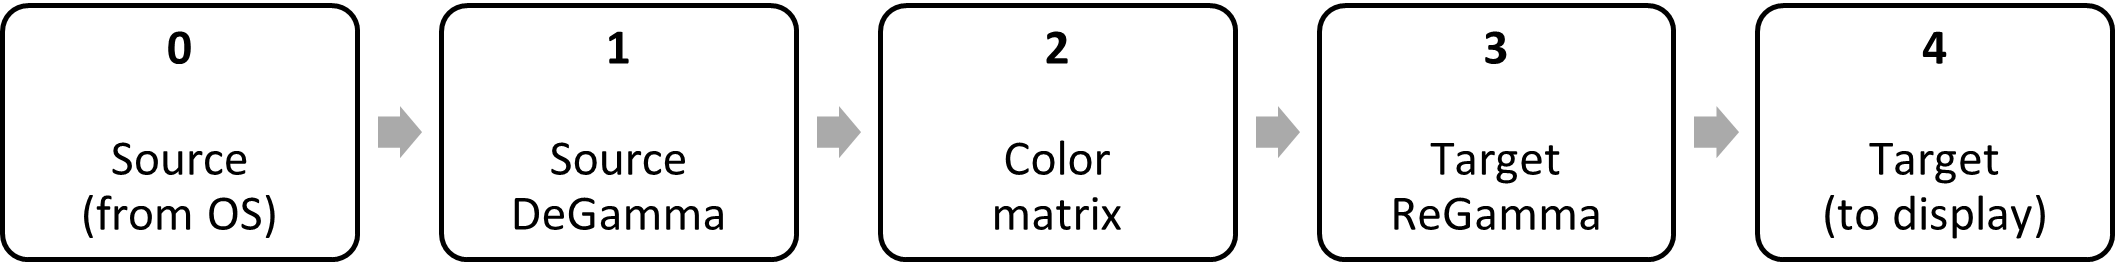 diagrama de bloco: degamma de origem, matriz de cores, regamma de destino